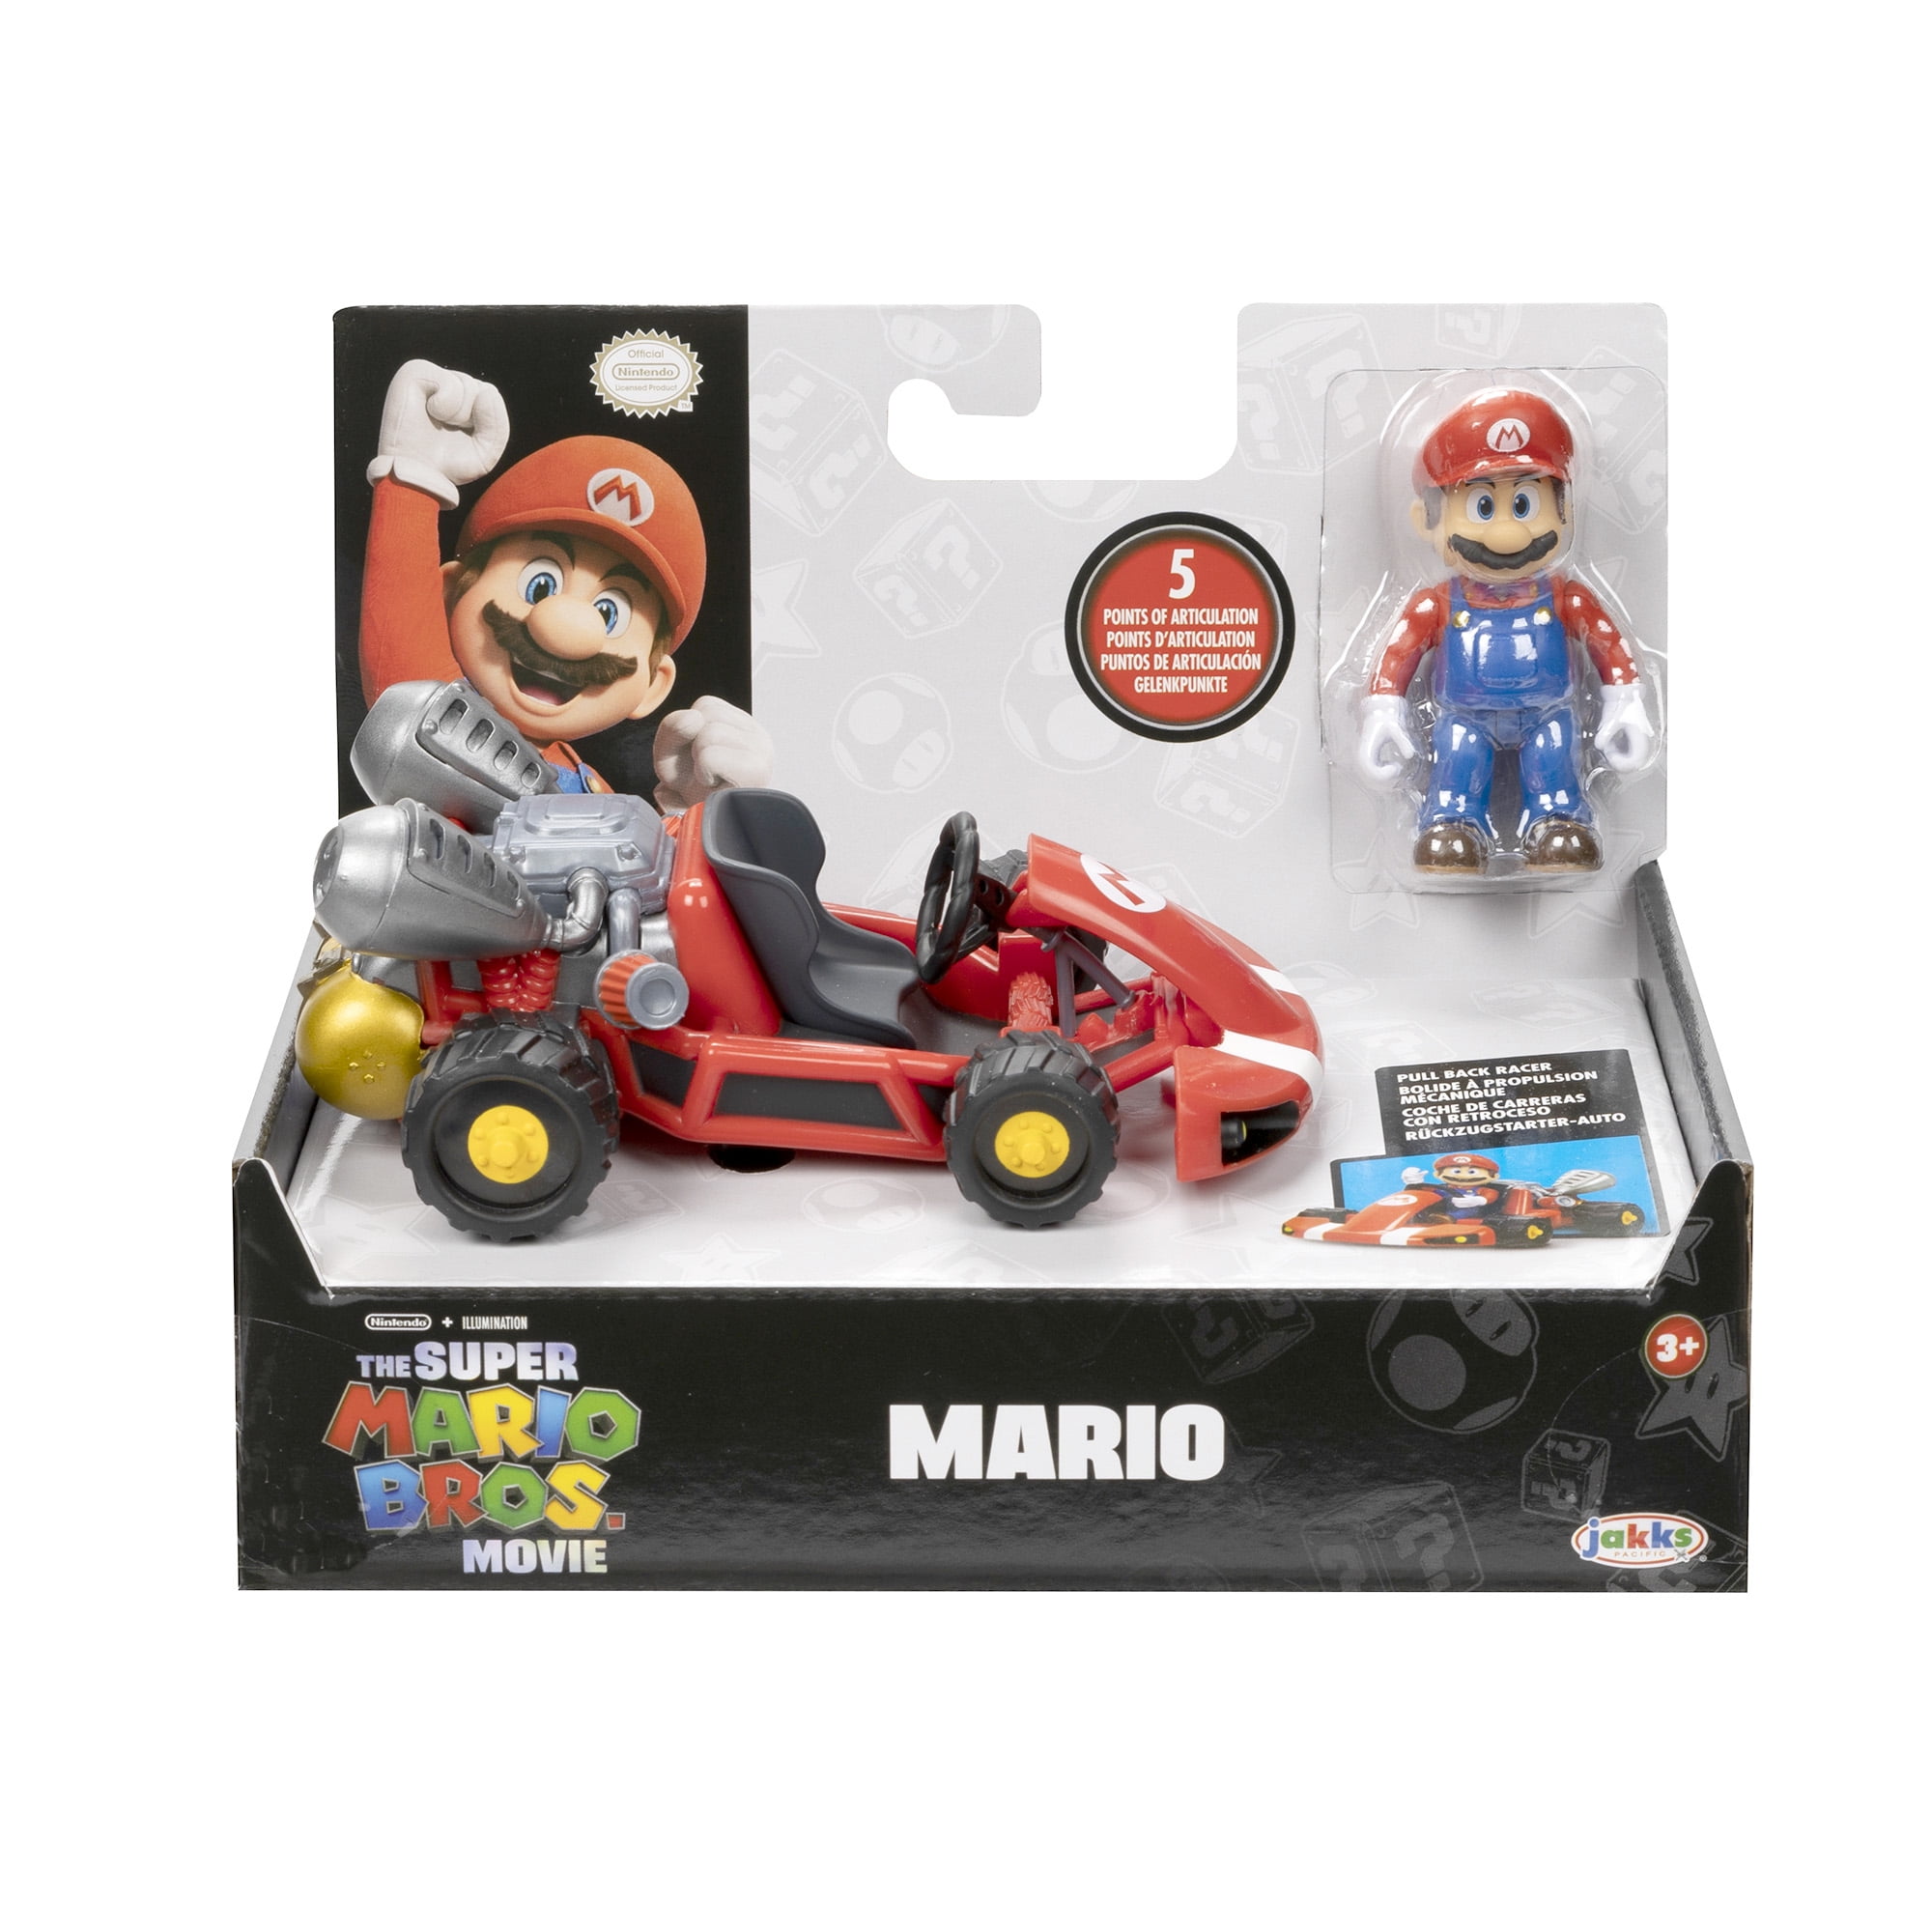 Mario - Mario Kart Figurine by JAKKS